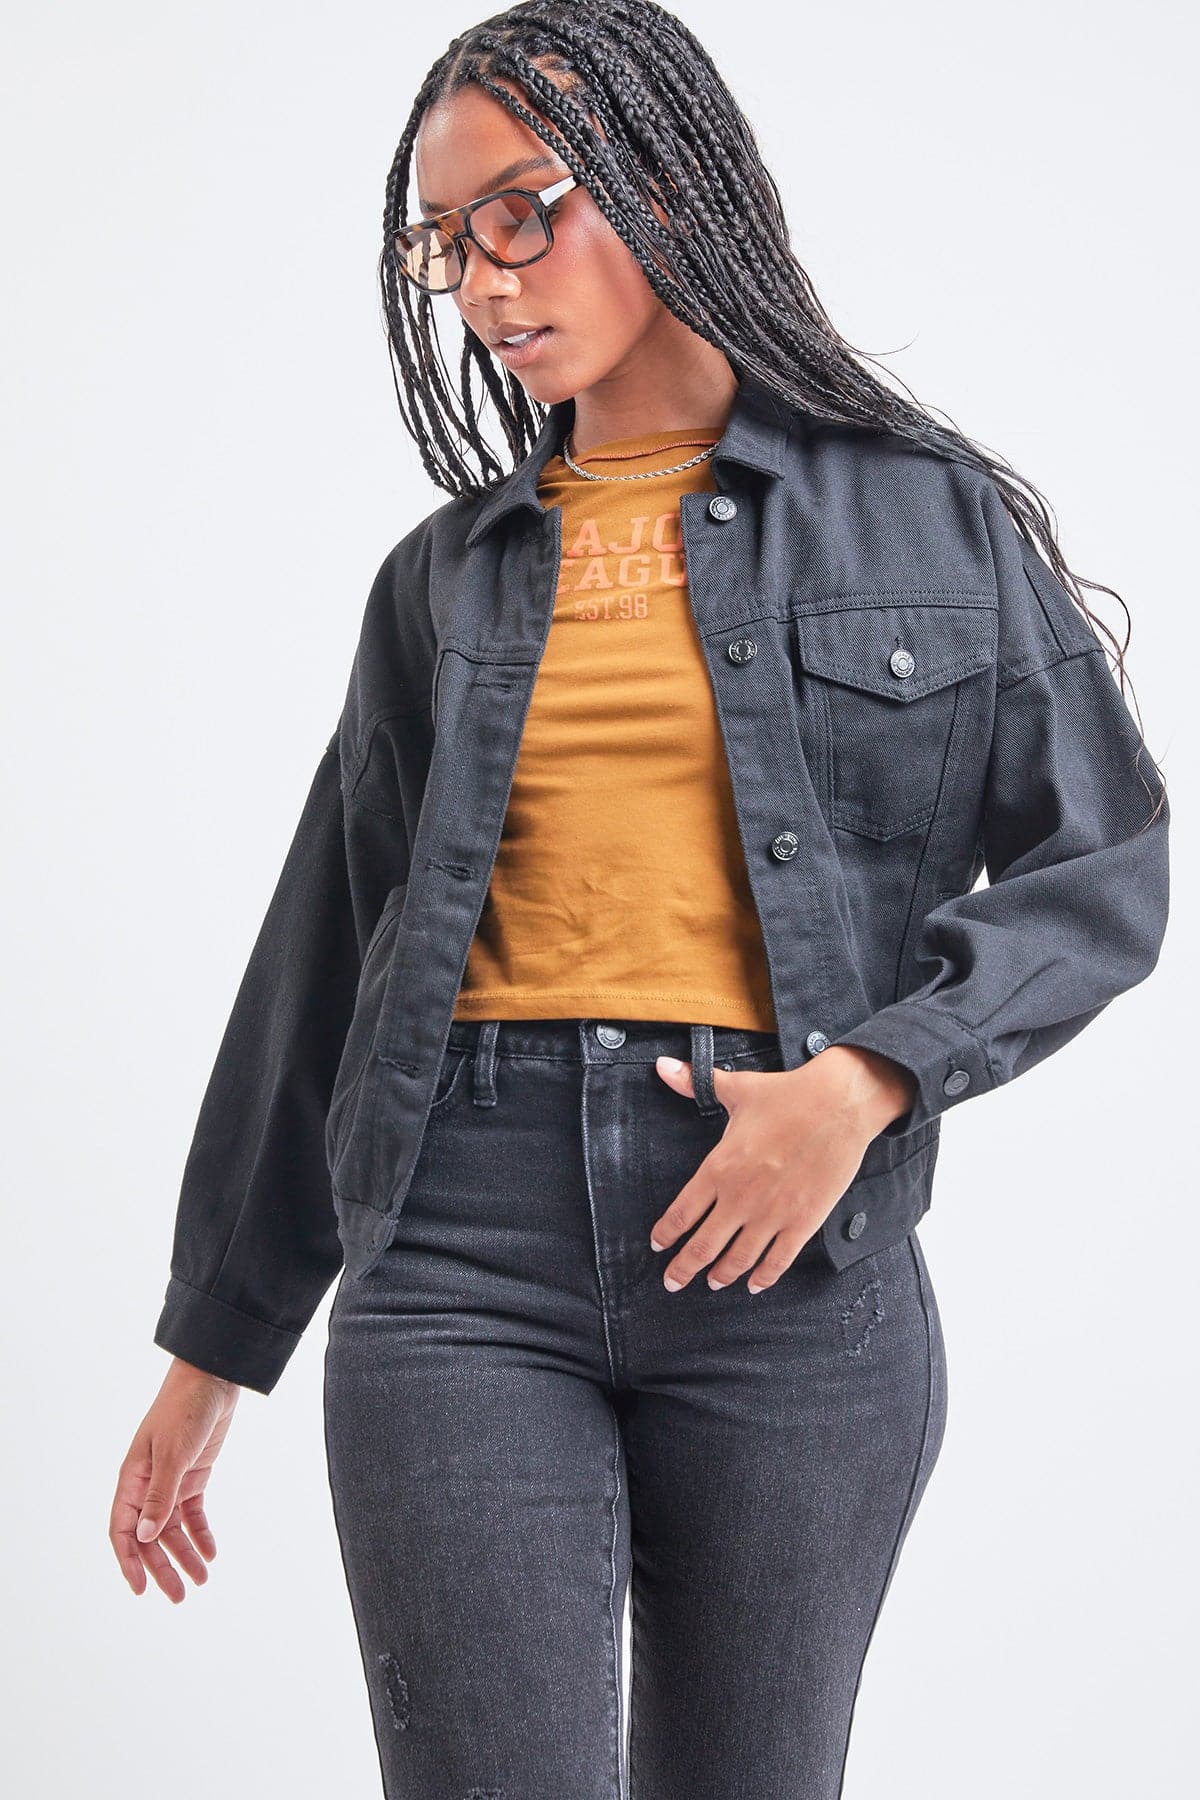 Women's 80's Style Denim Jacket With Elastic Hem